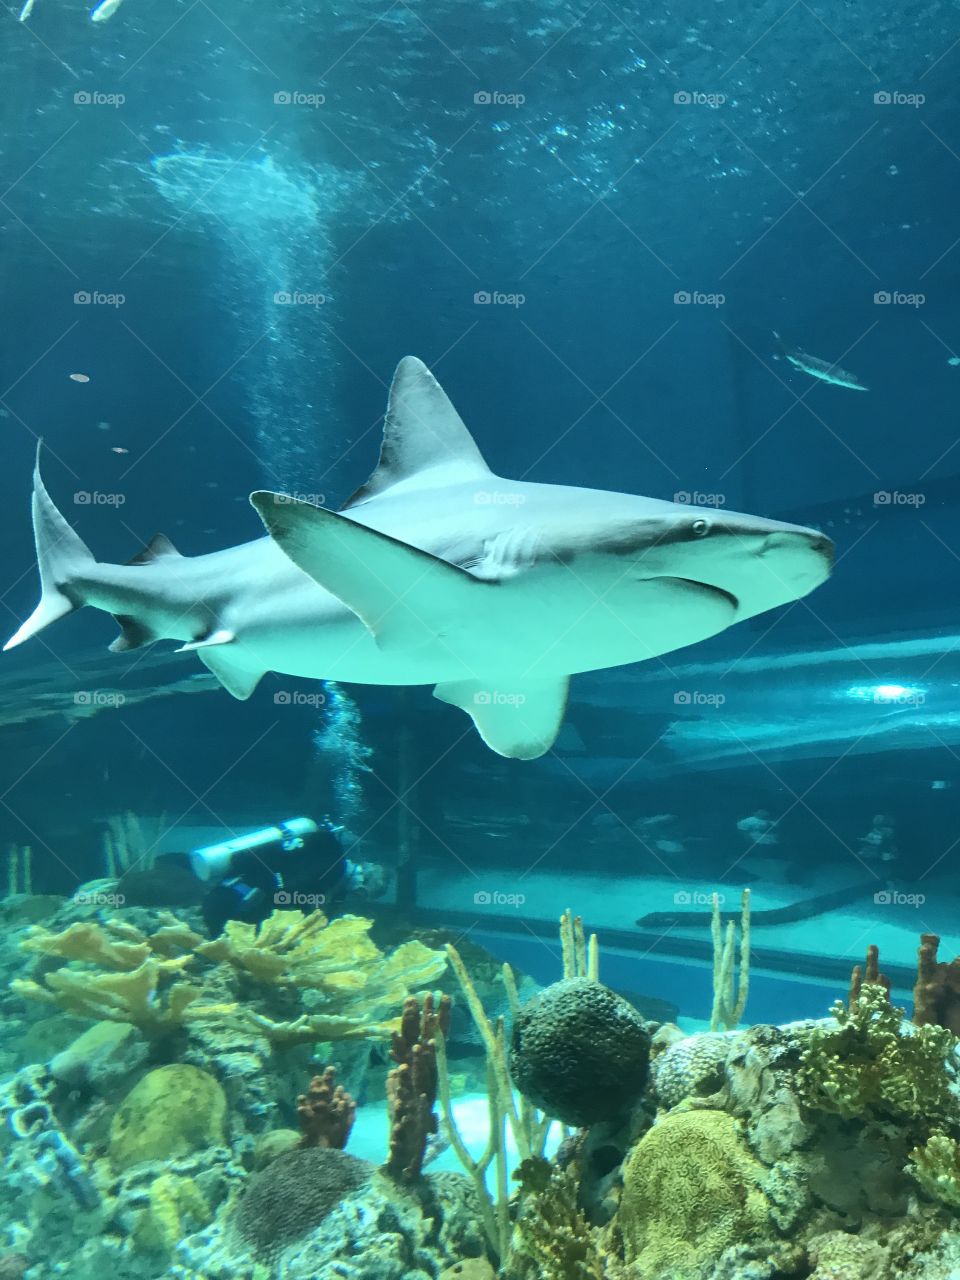 Shark
Texas state aquarium 
Corpus Christi Texas 